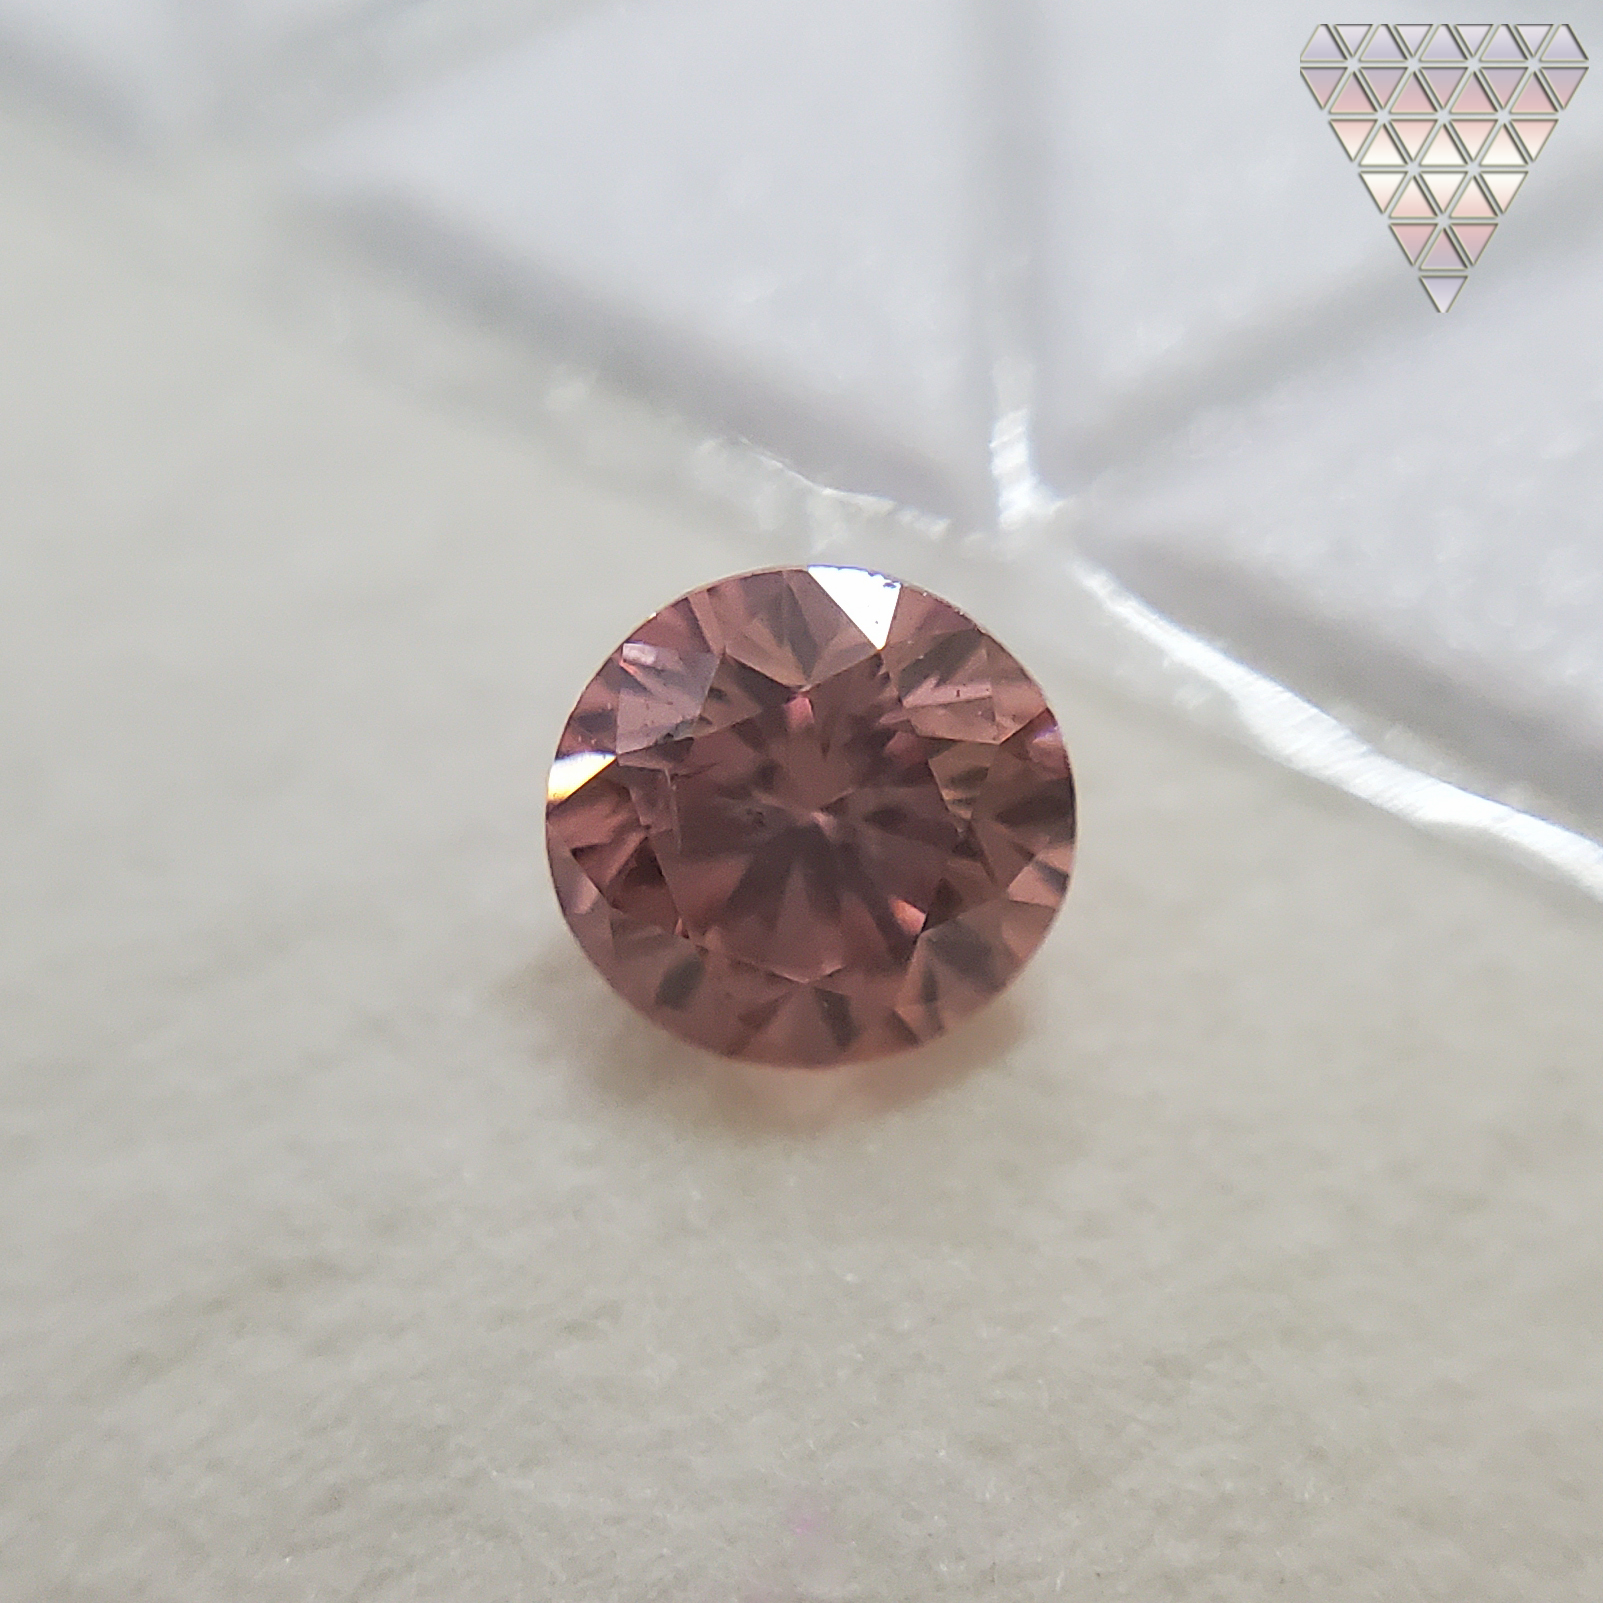 0.09 Carat, Fancy Intense Orangy Pink Natural Diamond, Round Shape,  Clarity, GIA 4